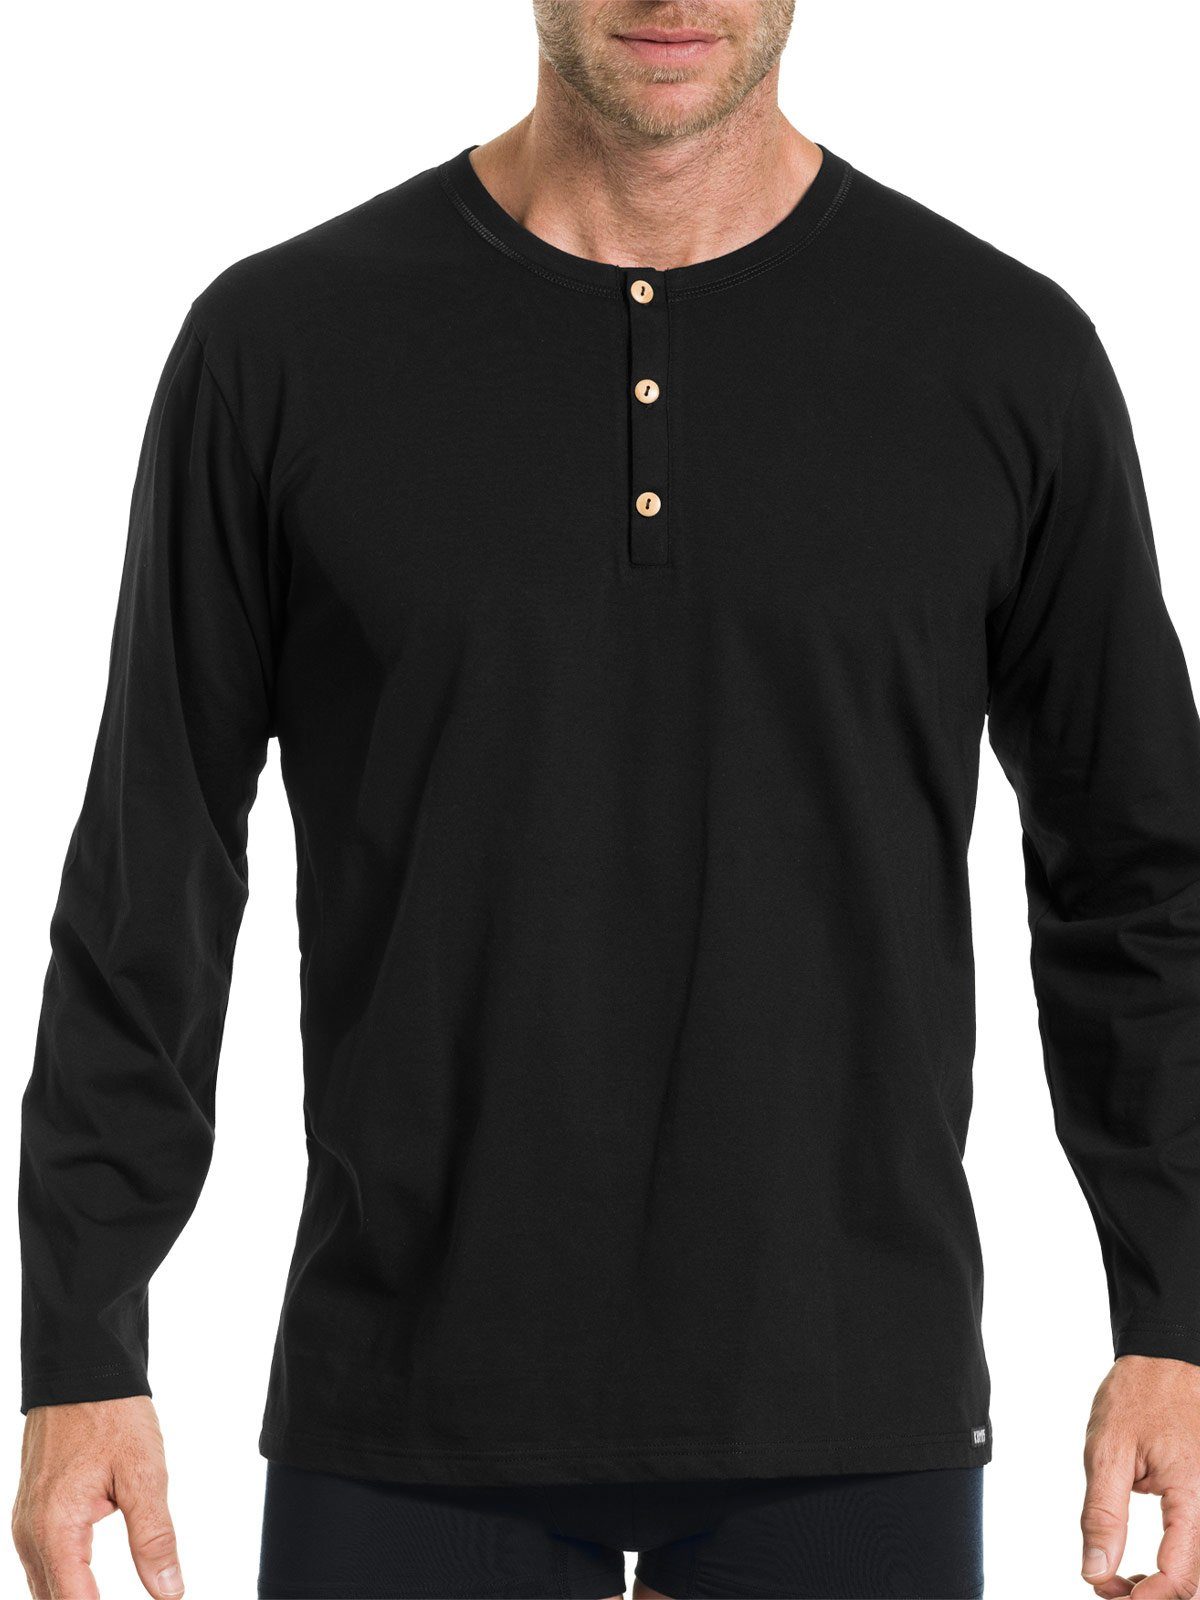 langarm KUMPF Cotton 2-St) Shirt Markenqualität schwarz Unterziehshirt 2er Bio Sparpack hohe Herren (Spar-Set,